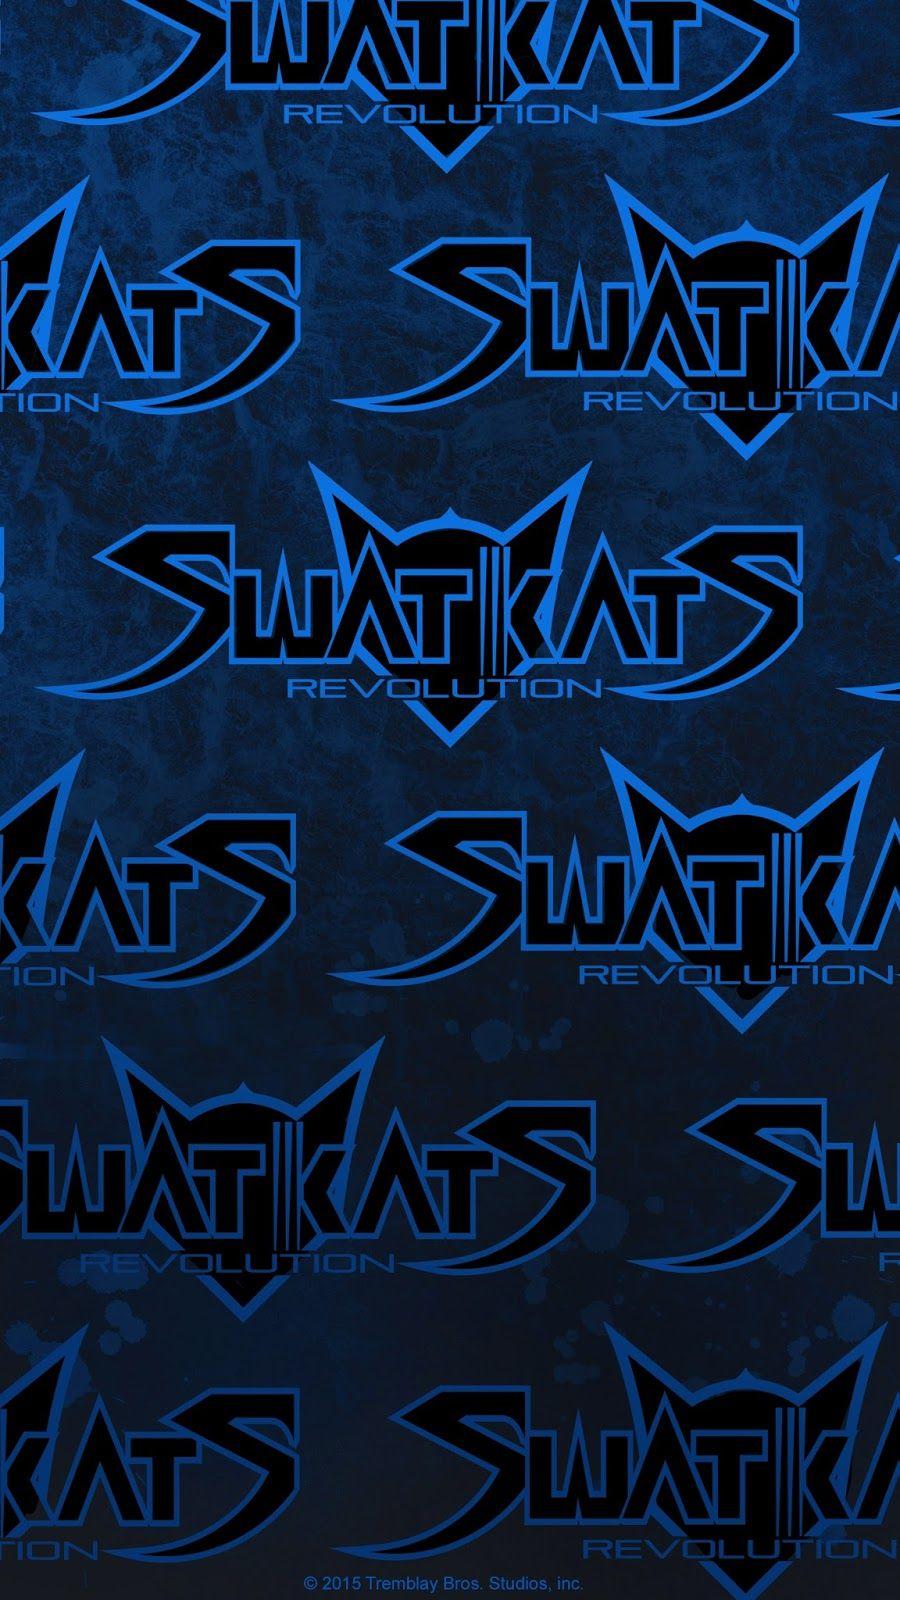 Swat Cats Wallpaper